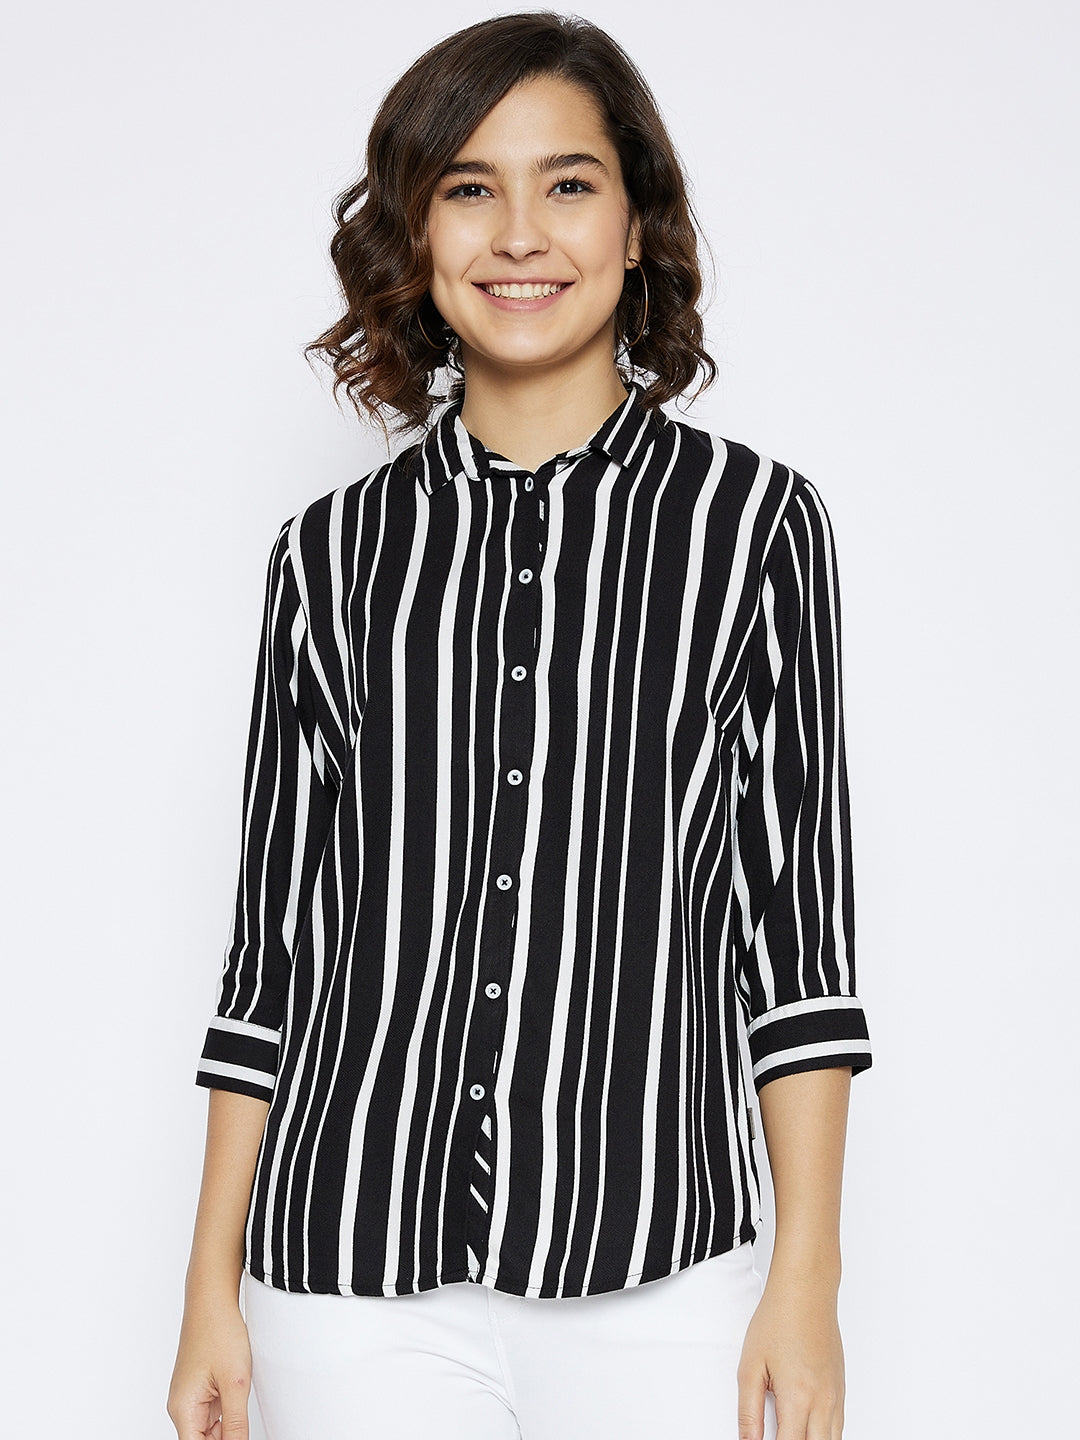 Black Striped Slim Fit shirt - Women Shirts